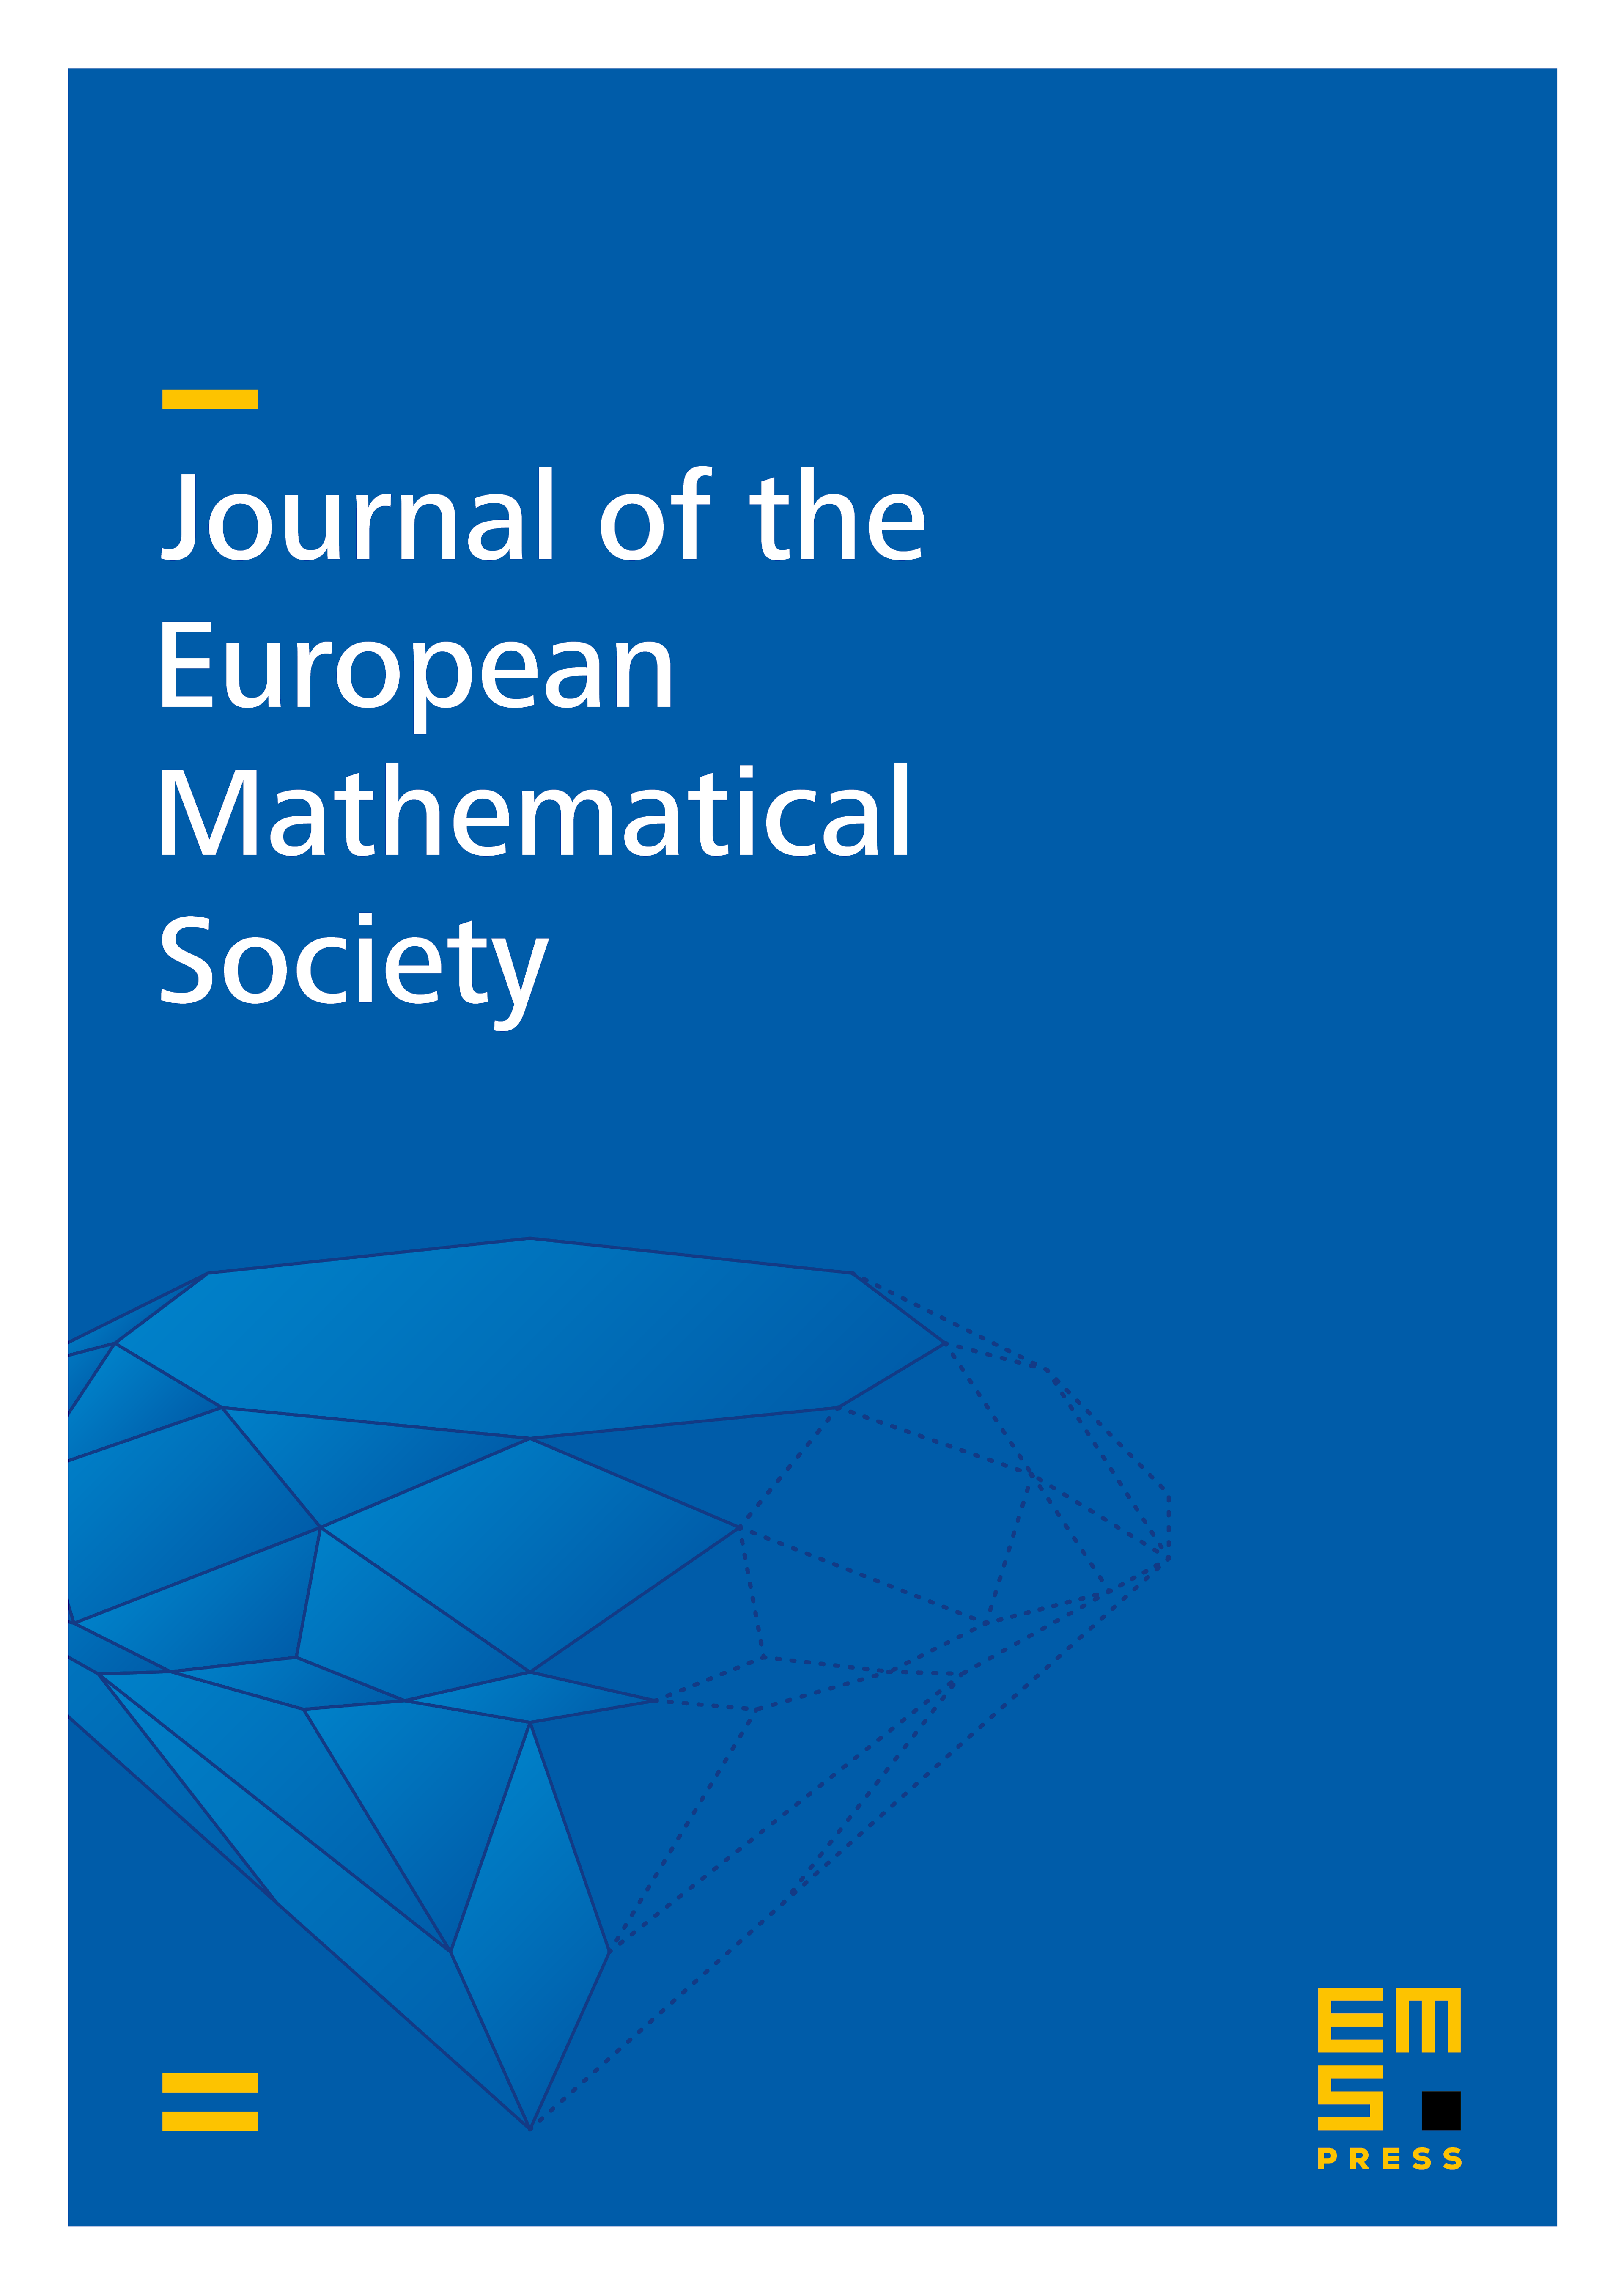 Poisson algebras via model theory and differential-algebraic geometry cover